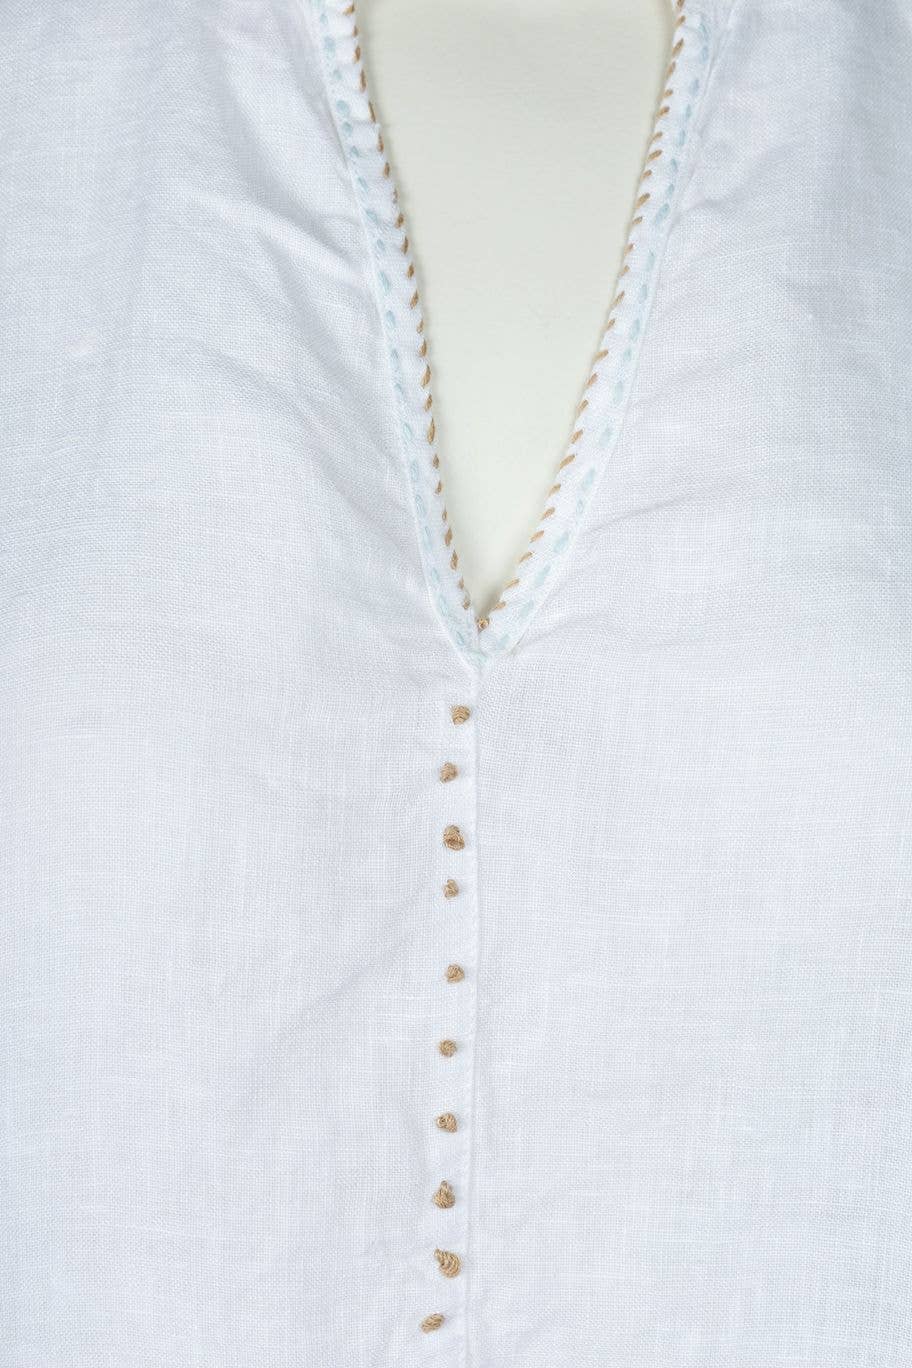 Dolma - French Knot Linen Top White: Medium / White